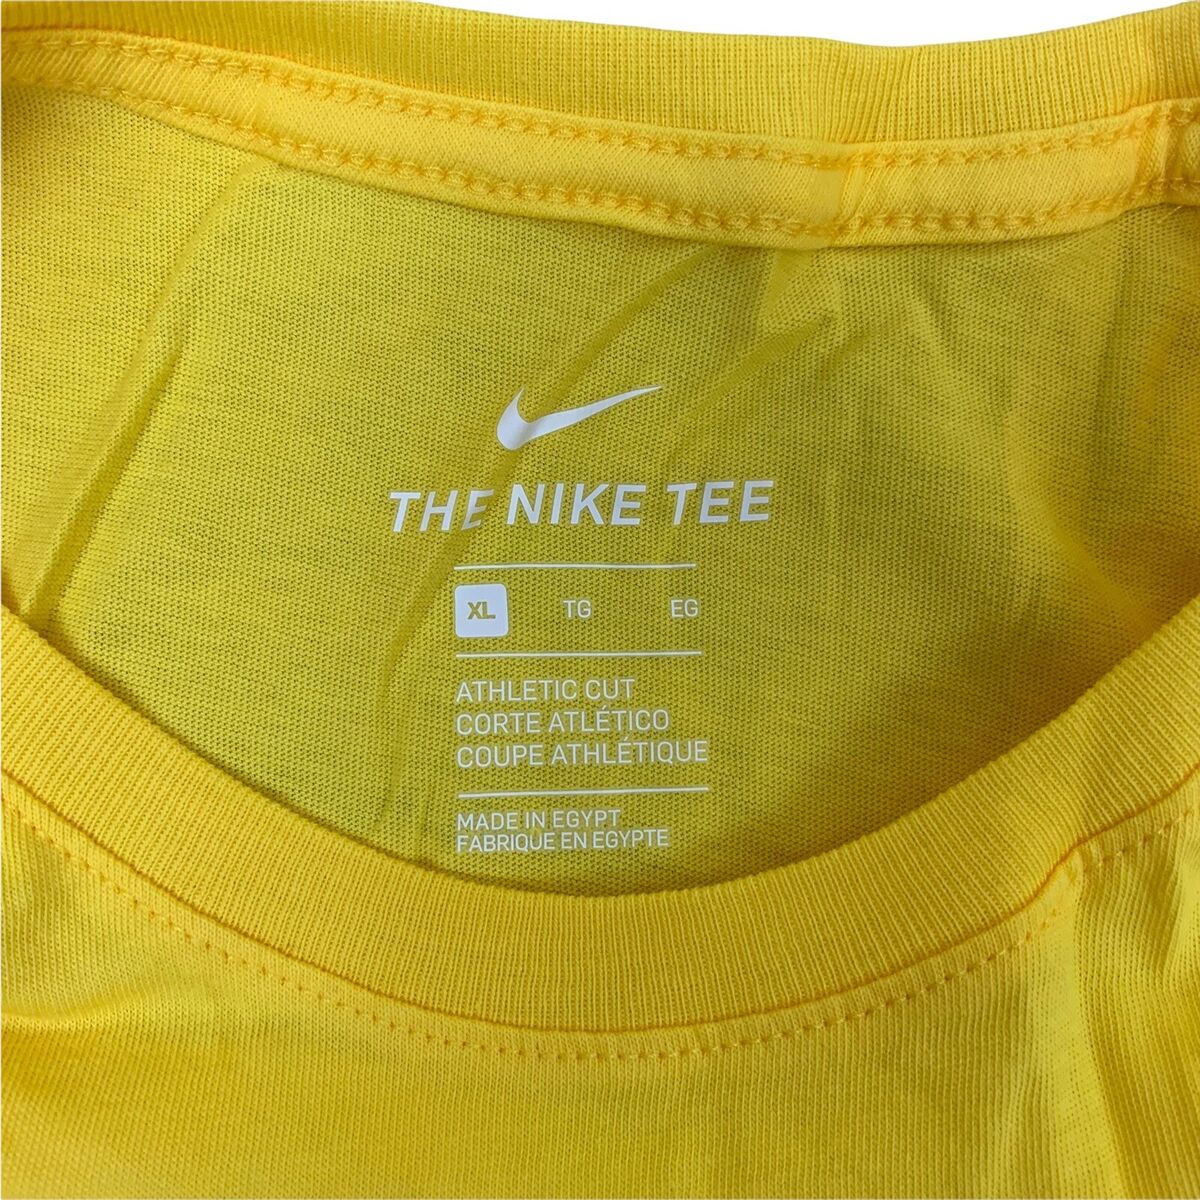 Brazil Brasileira CBF Futebol Nike Tee T-Shirt Size XL Yellow Green Soccer